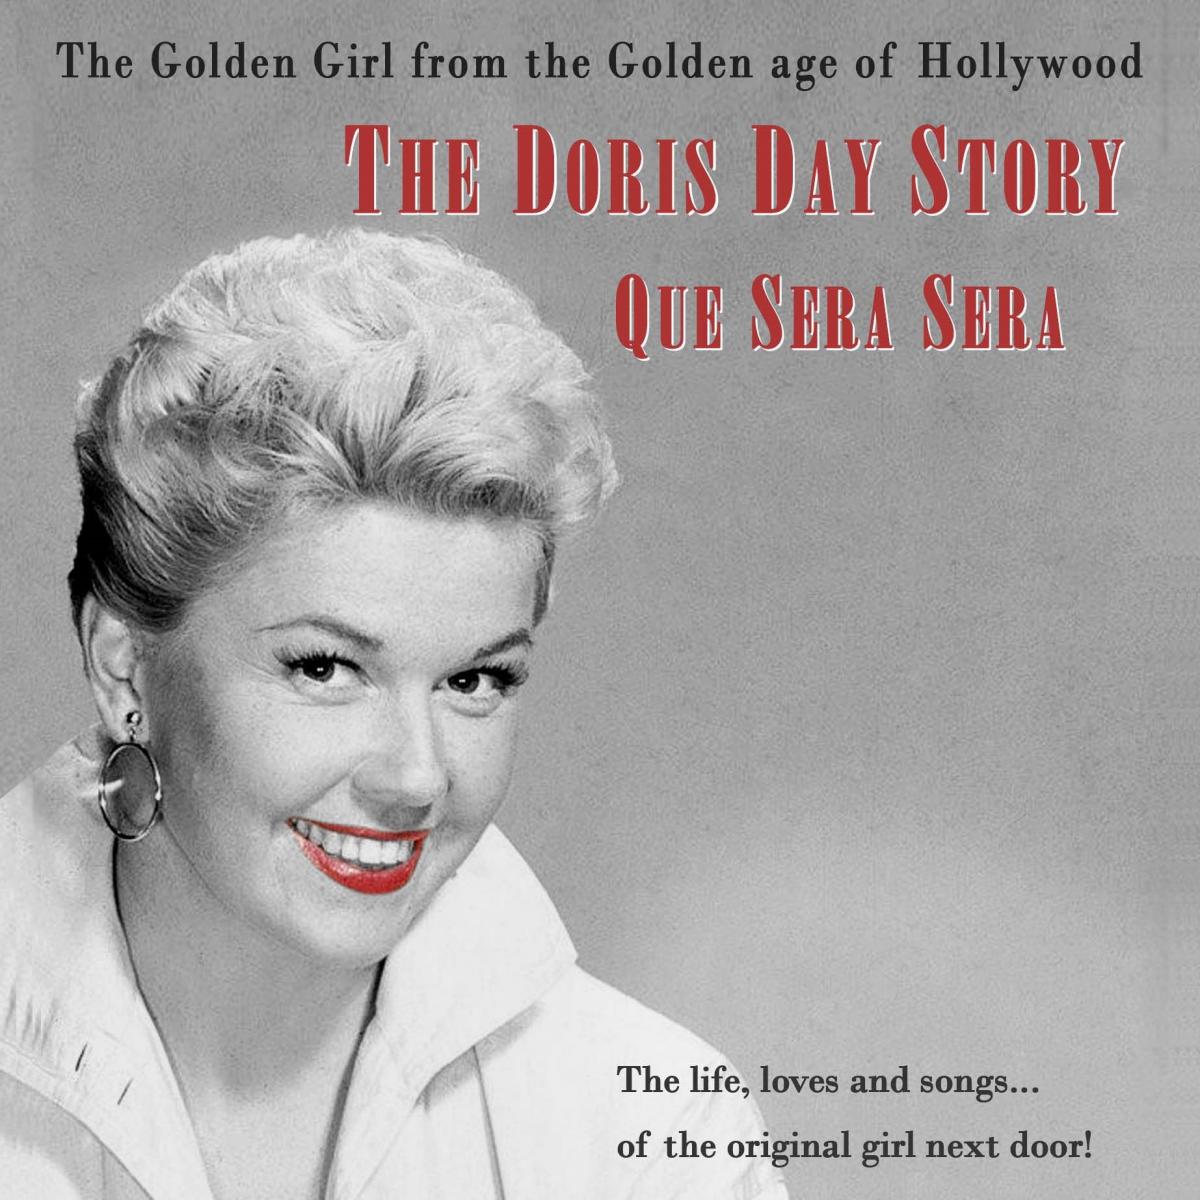 The Doris Day Story on 16 April 2022